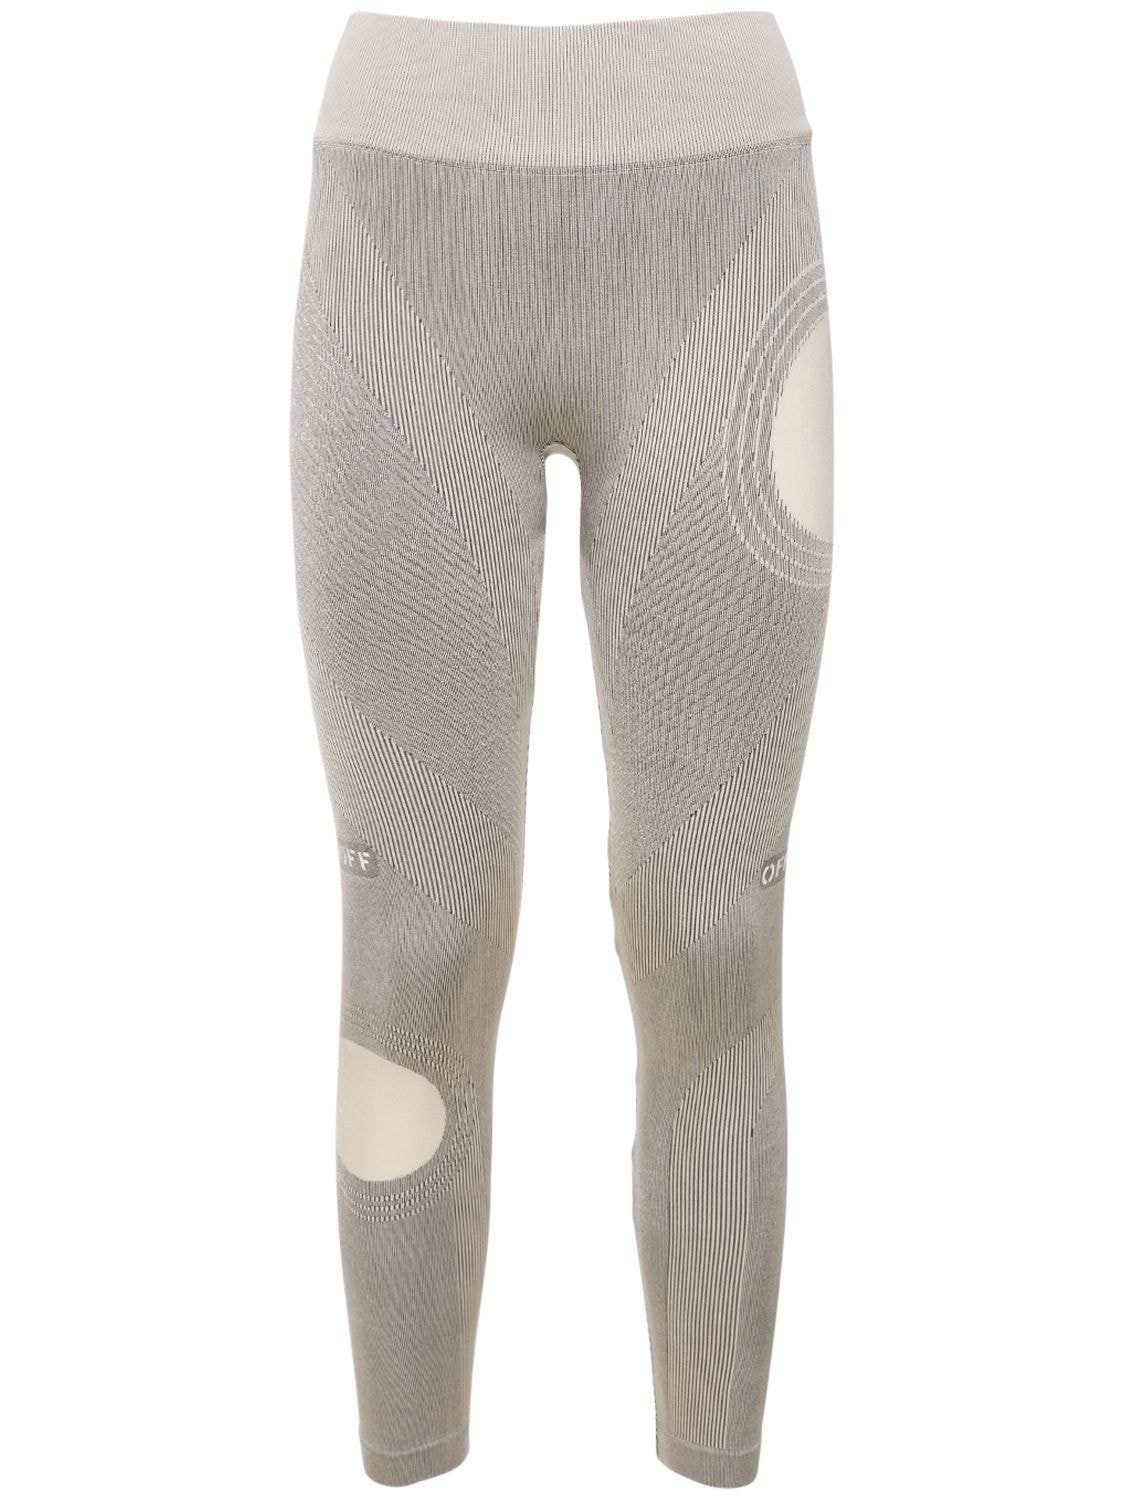 OFF-WHITE “METEOR”无接缝平纹针织紧身裤,73I4T8019-MDKWMA2